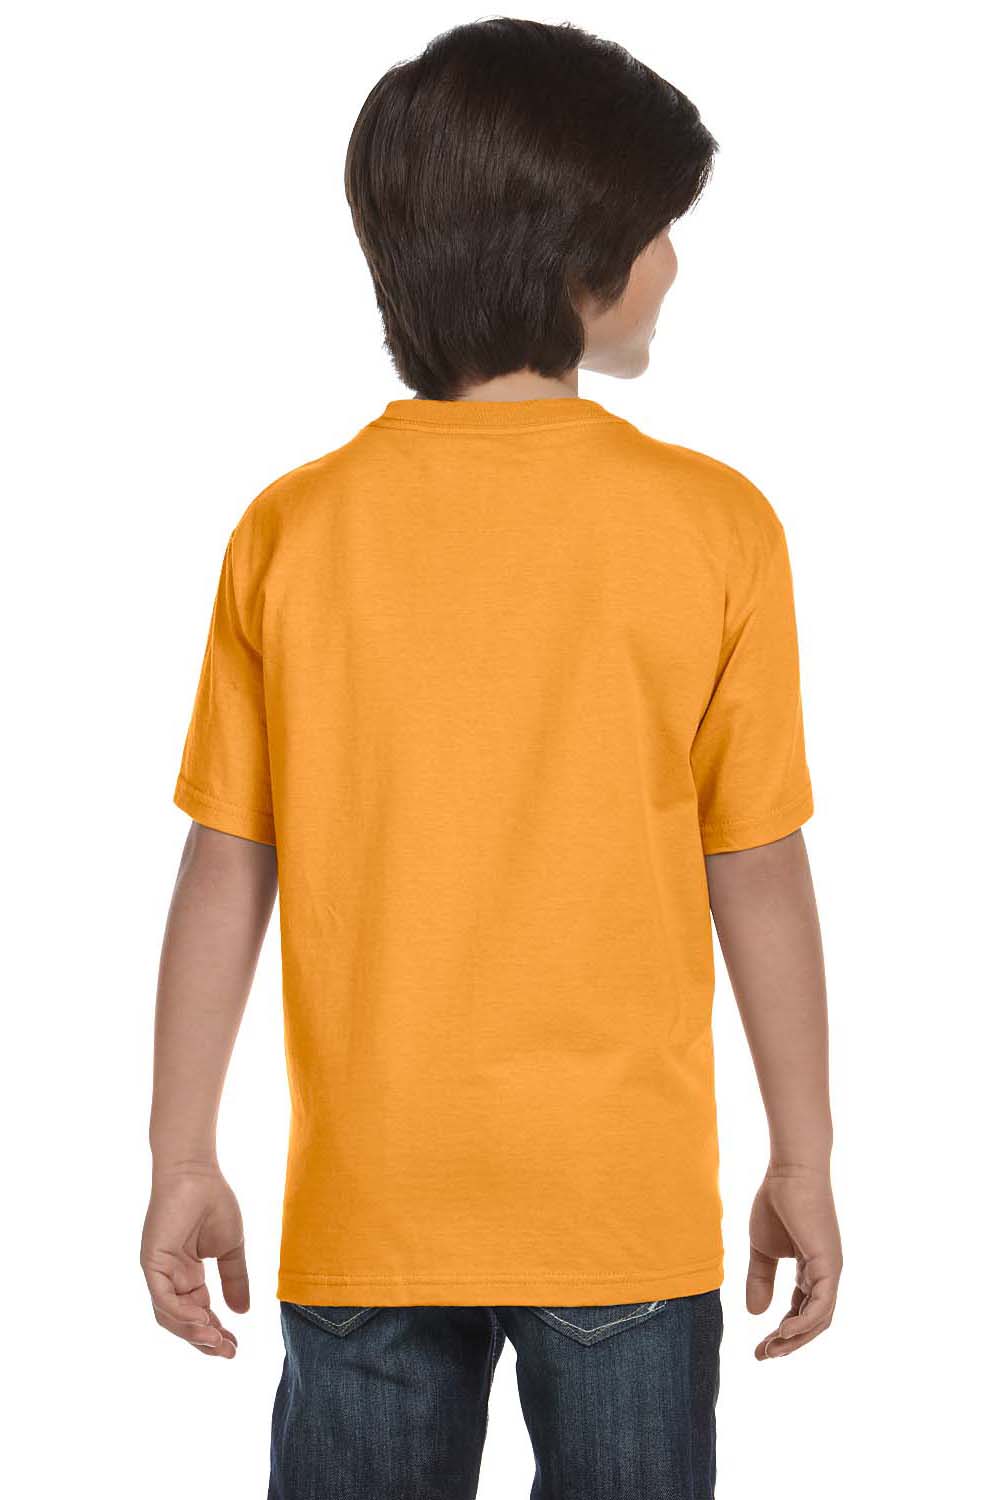 Hanes 5380 Youth Beefy-T Short Sleeve Crewneck T-Shirt Gold Back